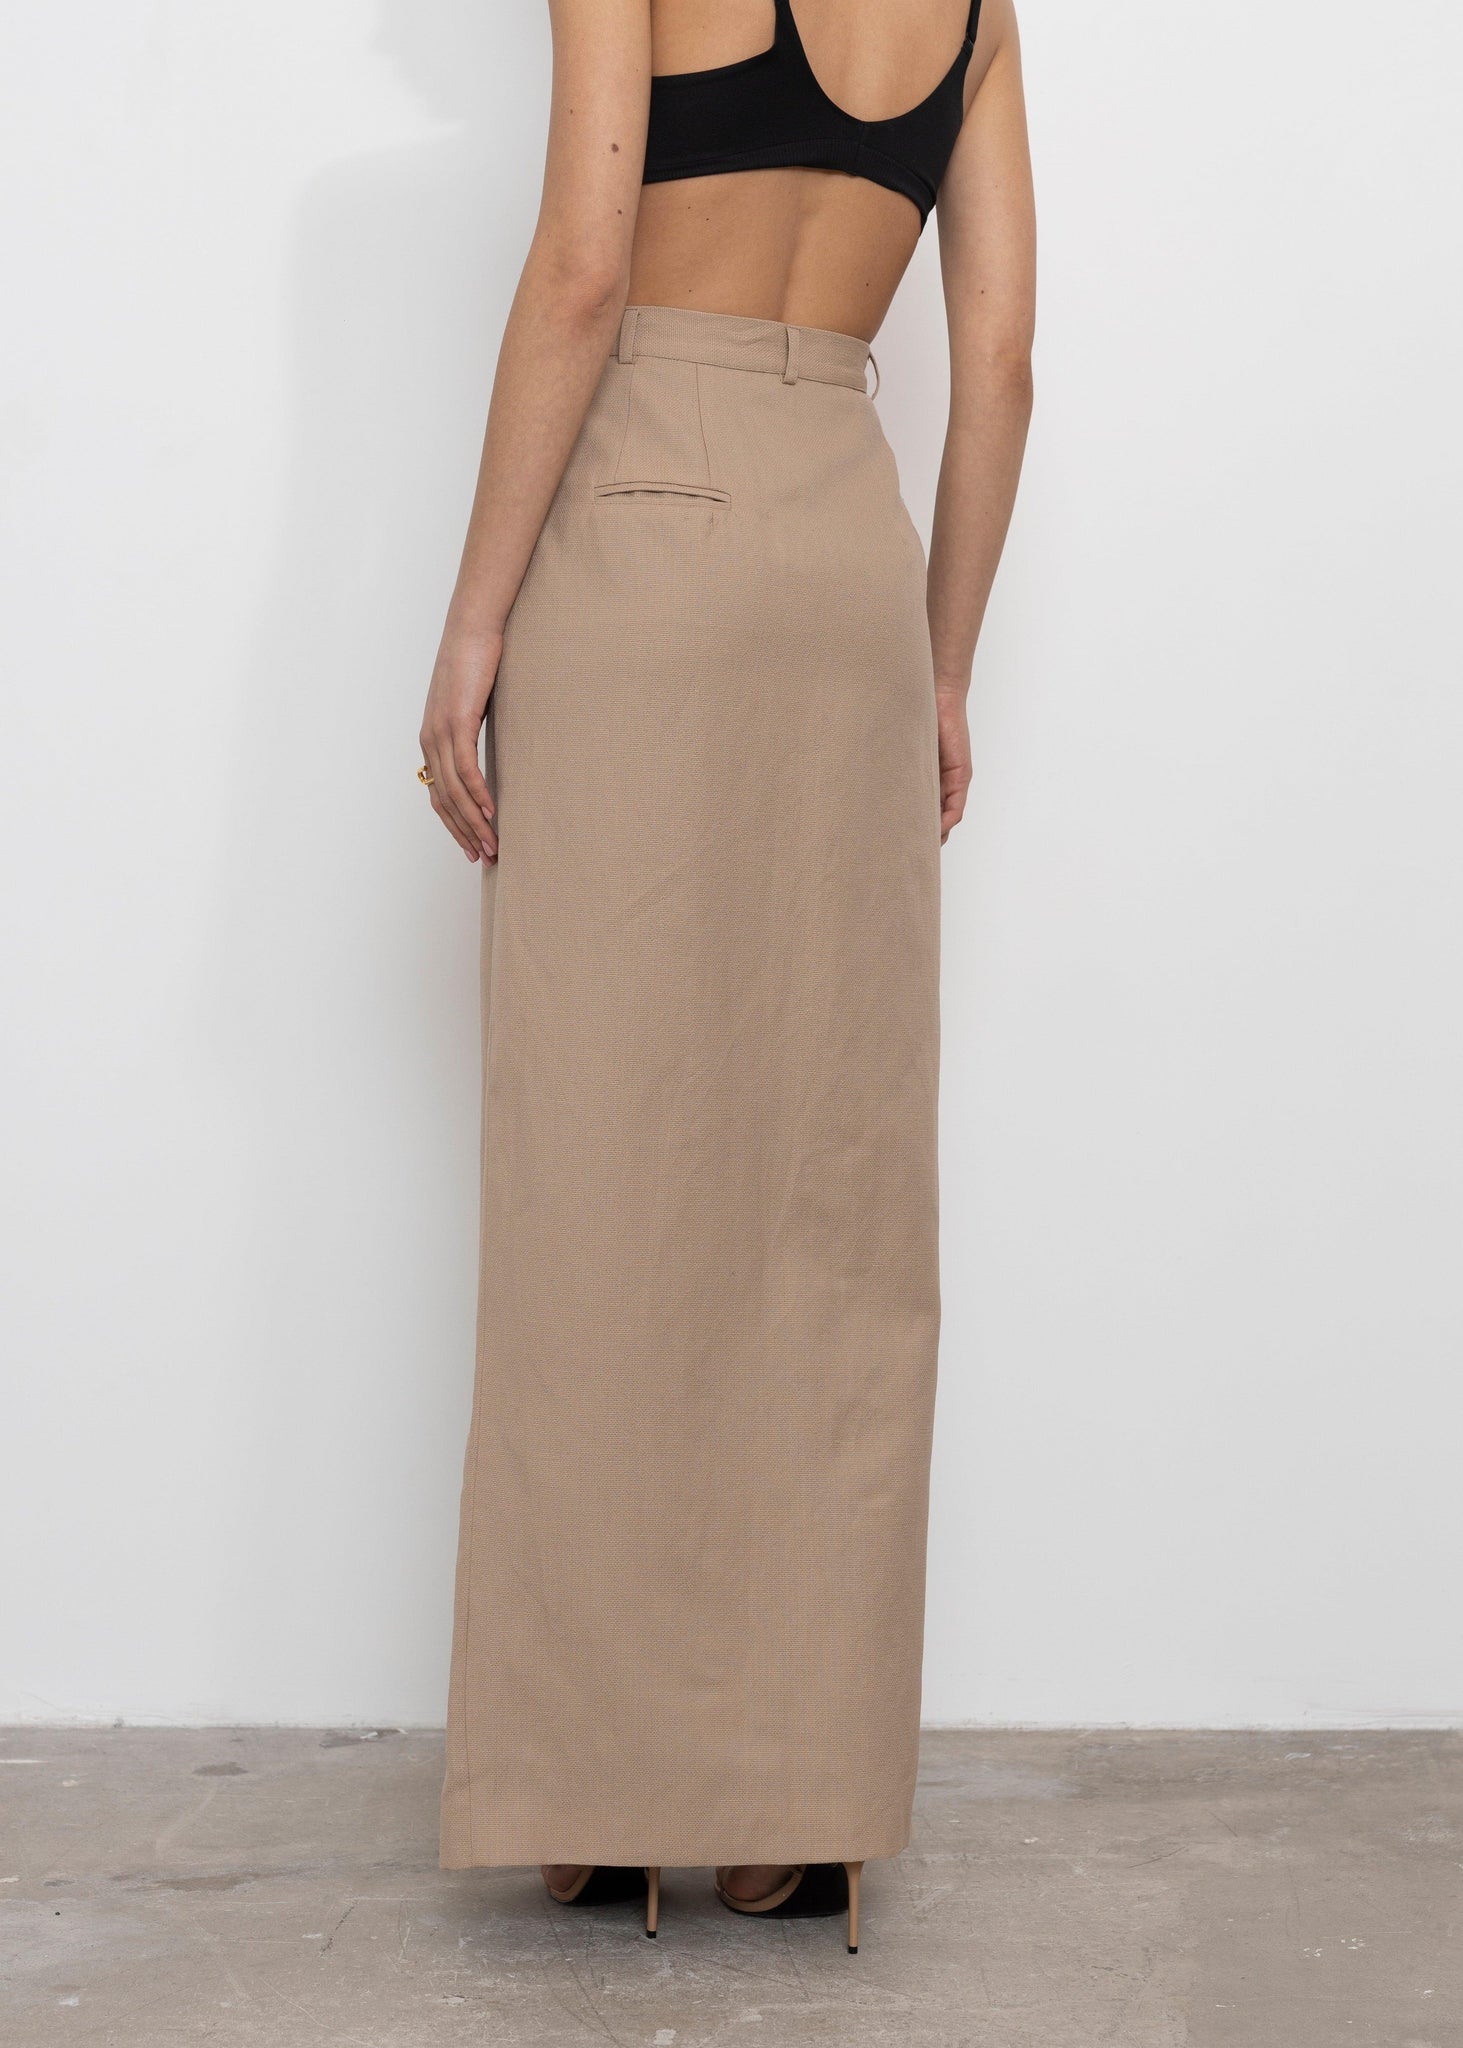 Linen Long Beige Skirt | Sustainable Fashion Brand 